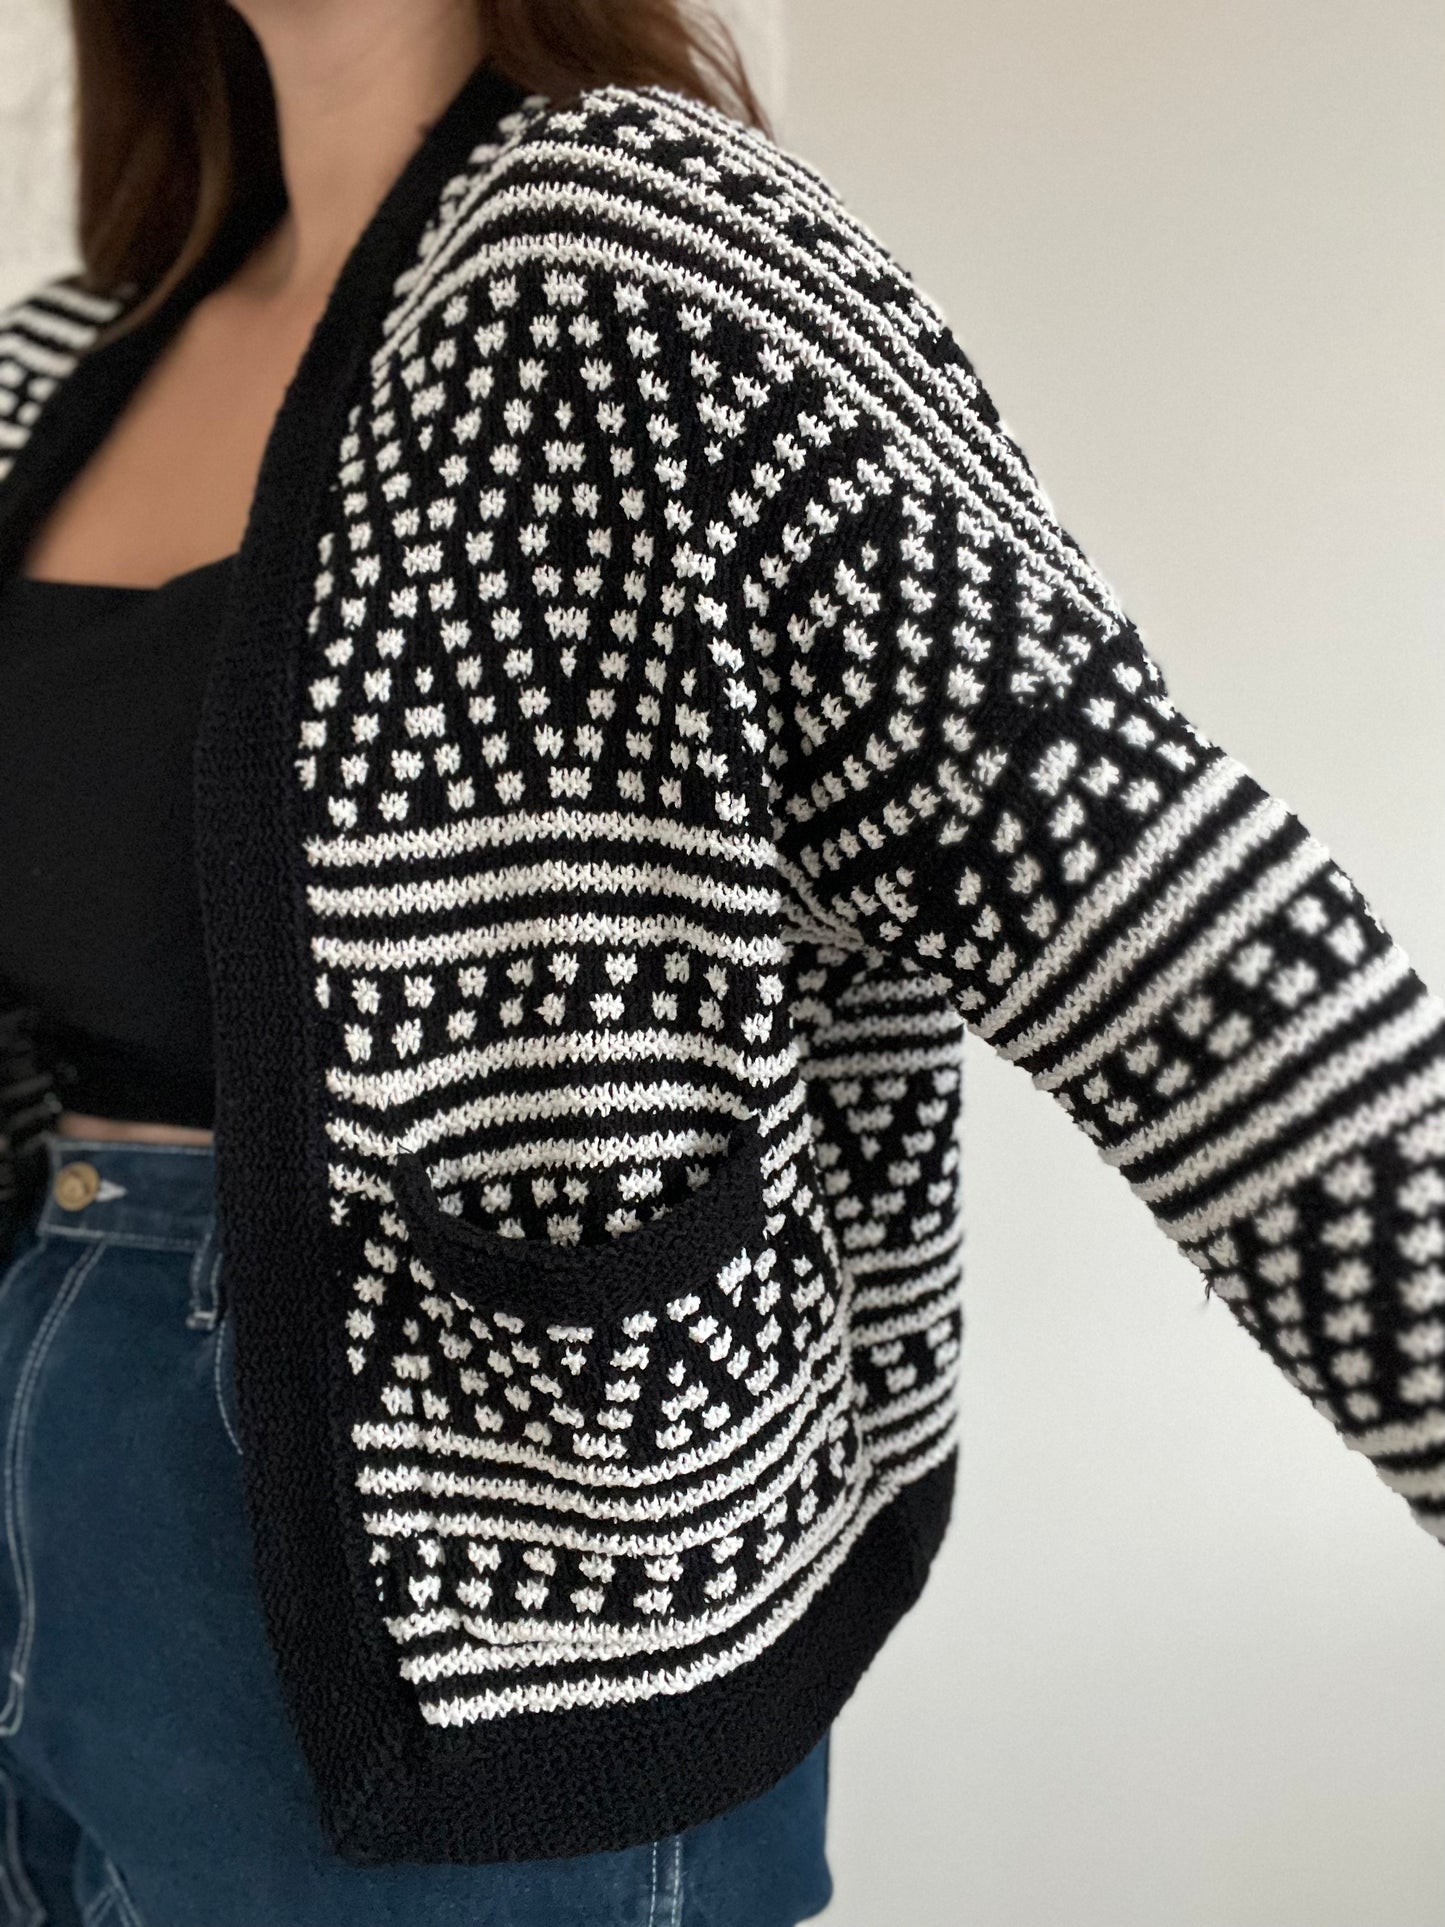 Madwell Saunter Cardigan Sweater  - Size S